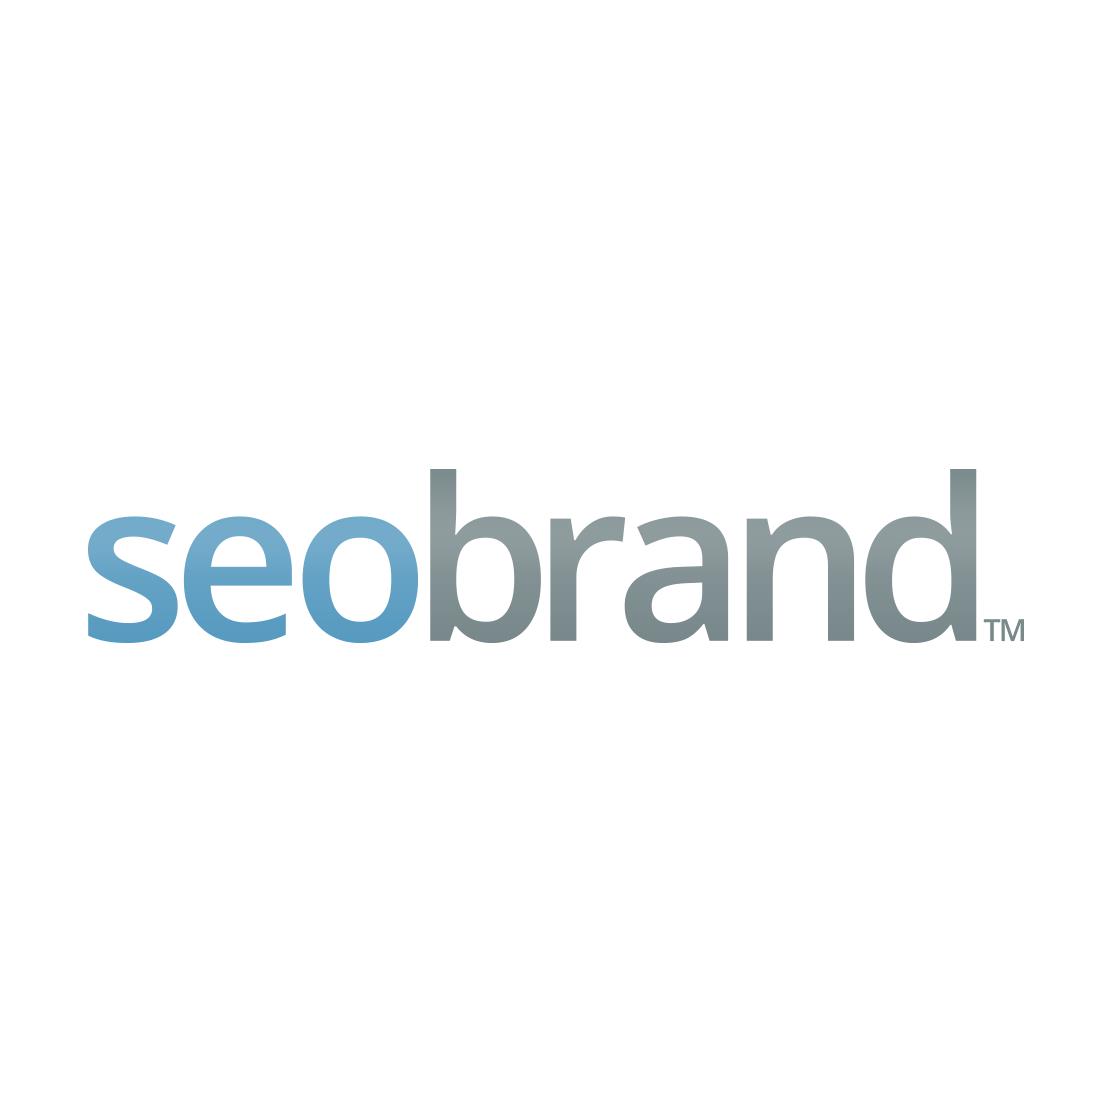 Best Search Engine Optimization Business Logo: SEO Brand